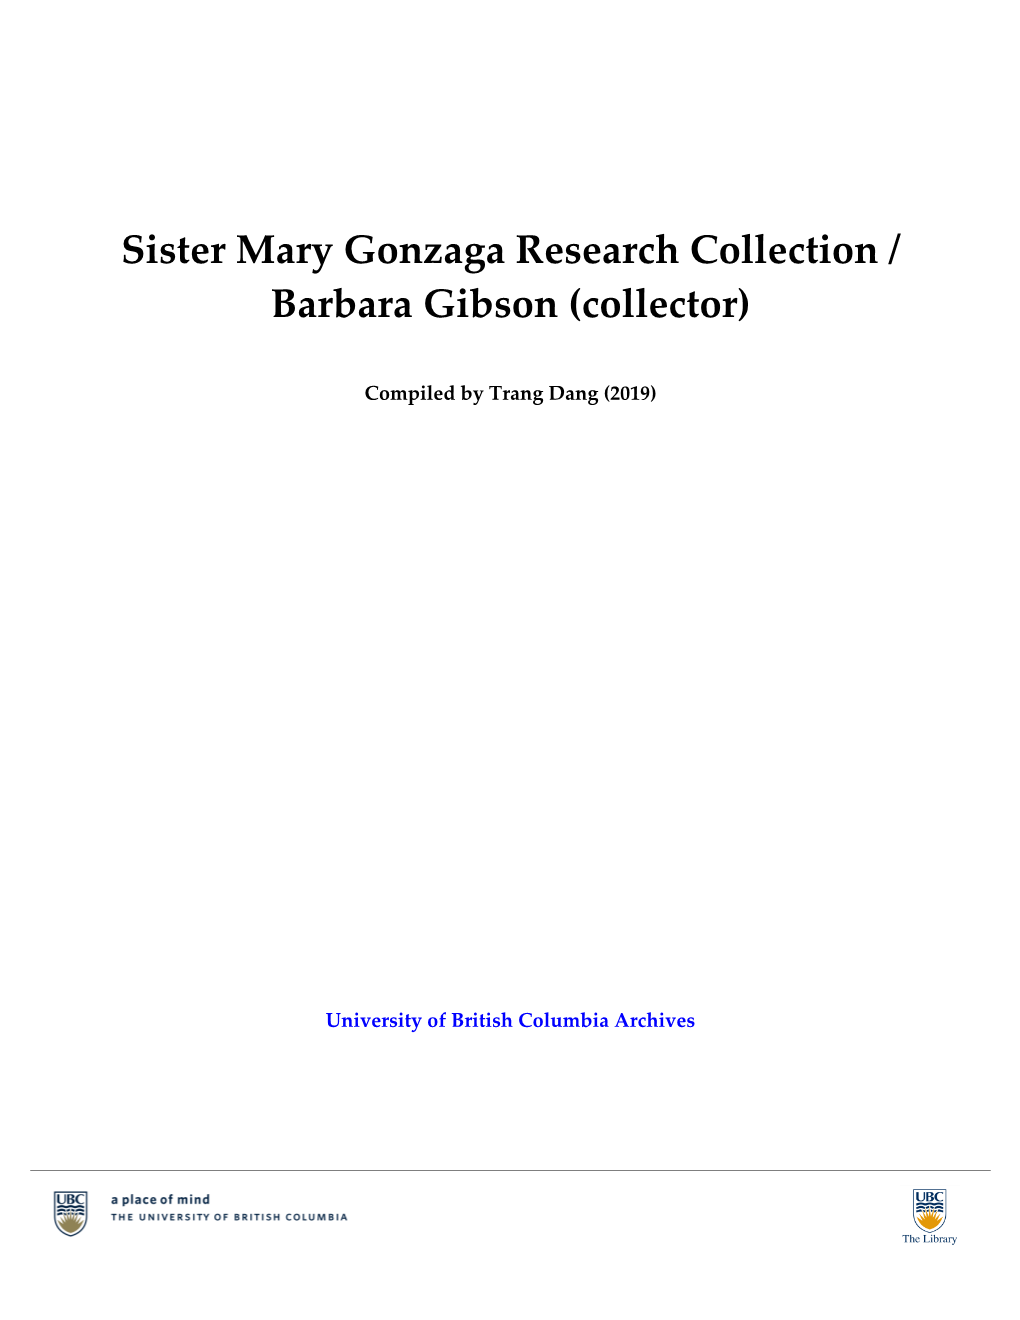 Sister Mary Gonzaga Research Collection / Barbara Gibson (Collector)